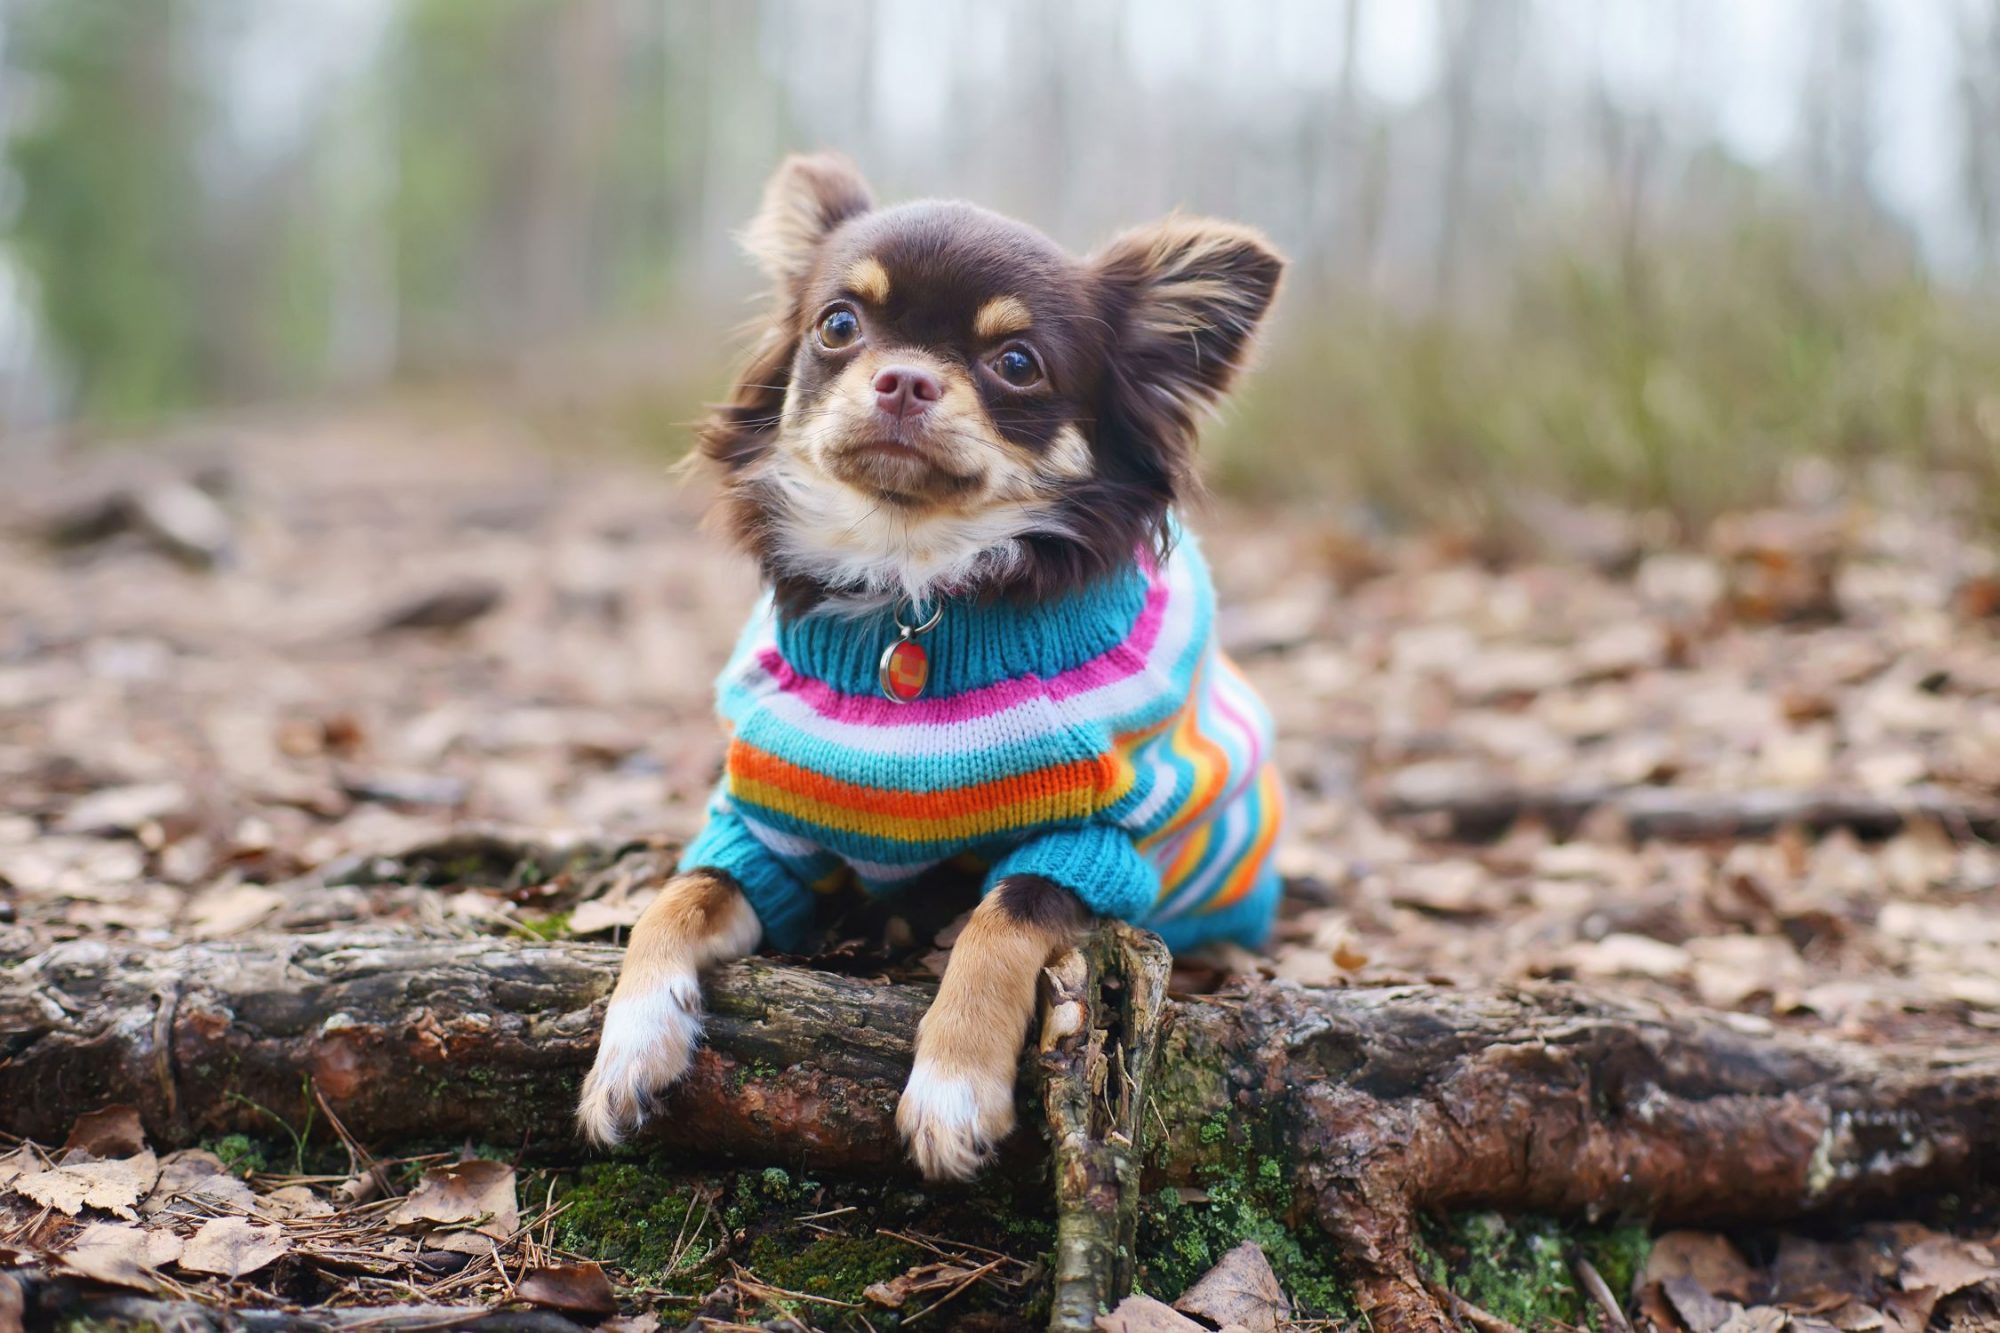 A chihuahua wearing a sweater.